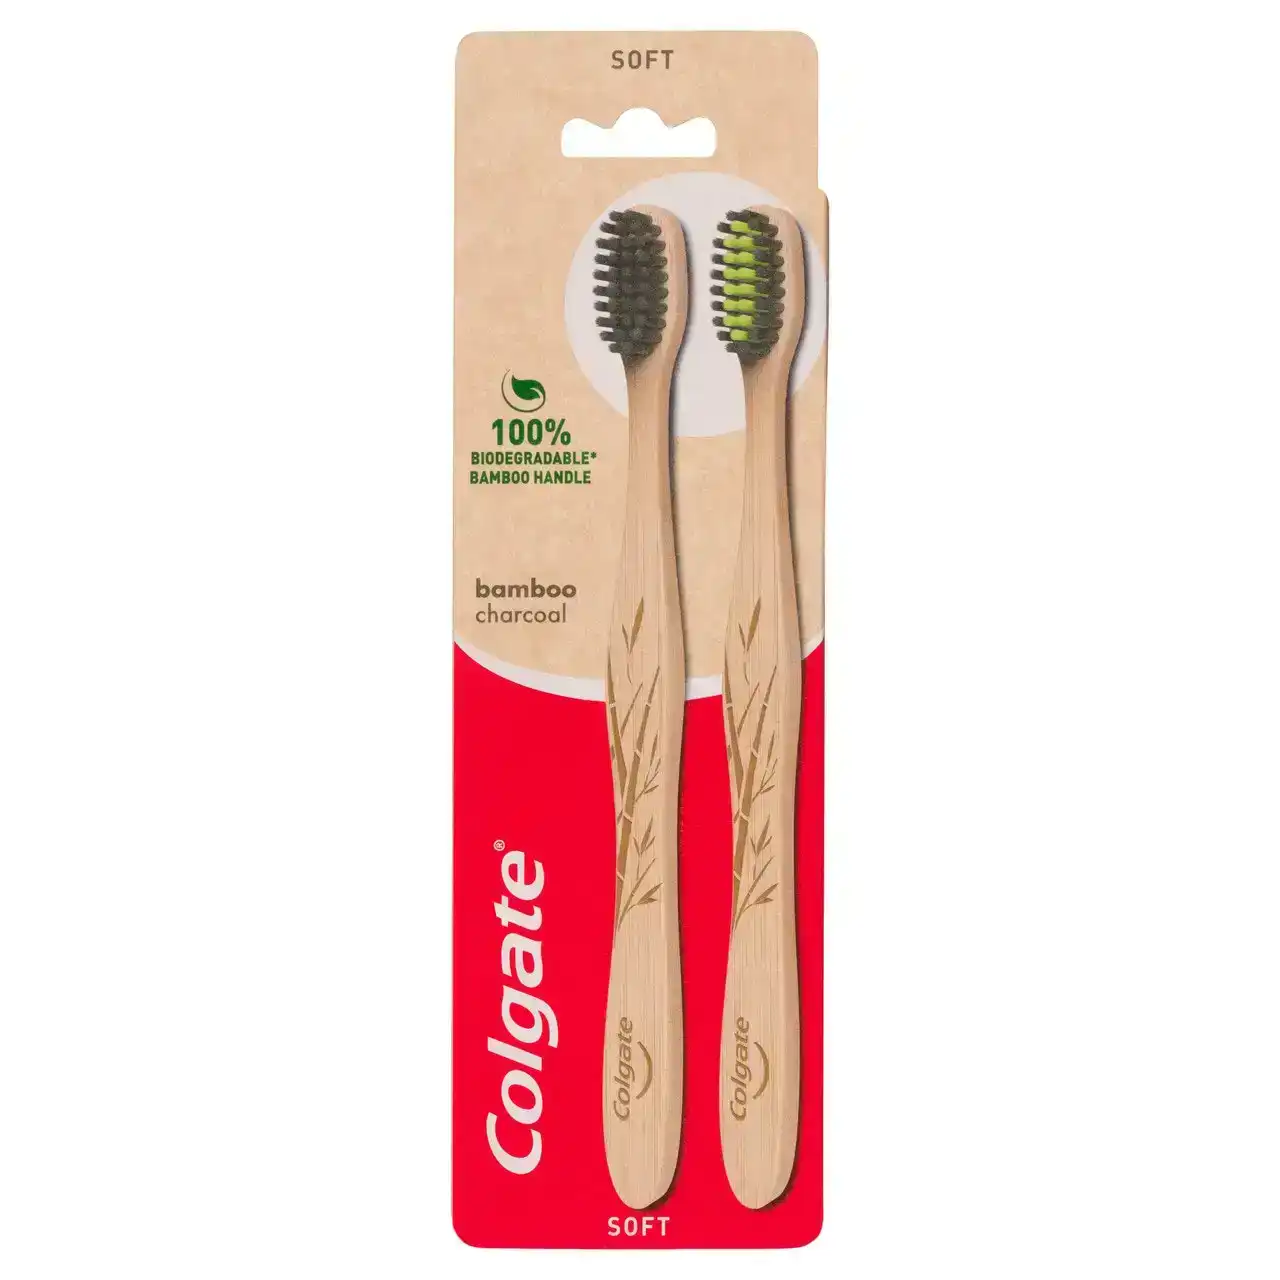 Colgate Bamboo Charcoal Manual Toothbrush, Value 2 Pack, Soft Bristles, 100% Biodegradable Bamboo Handle, BPA Free